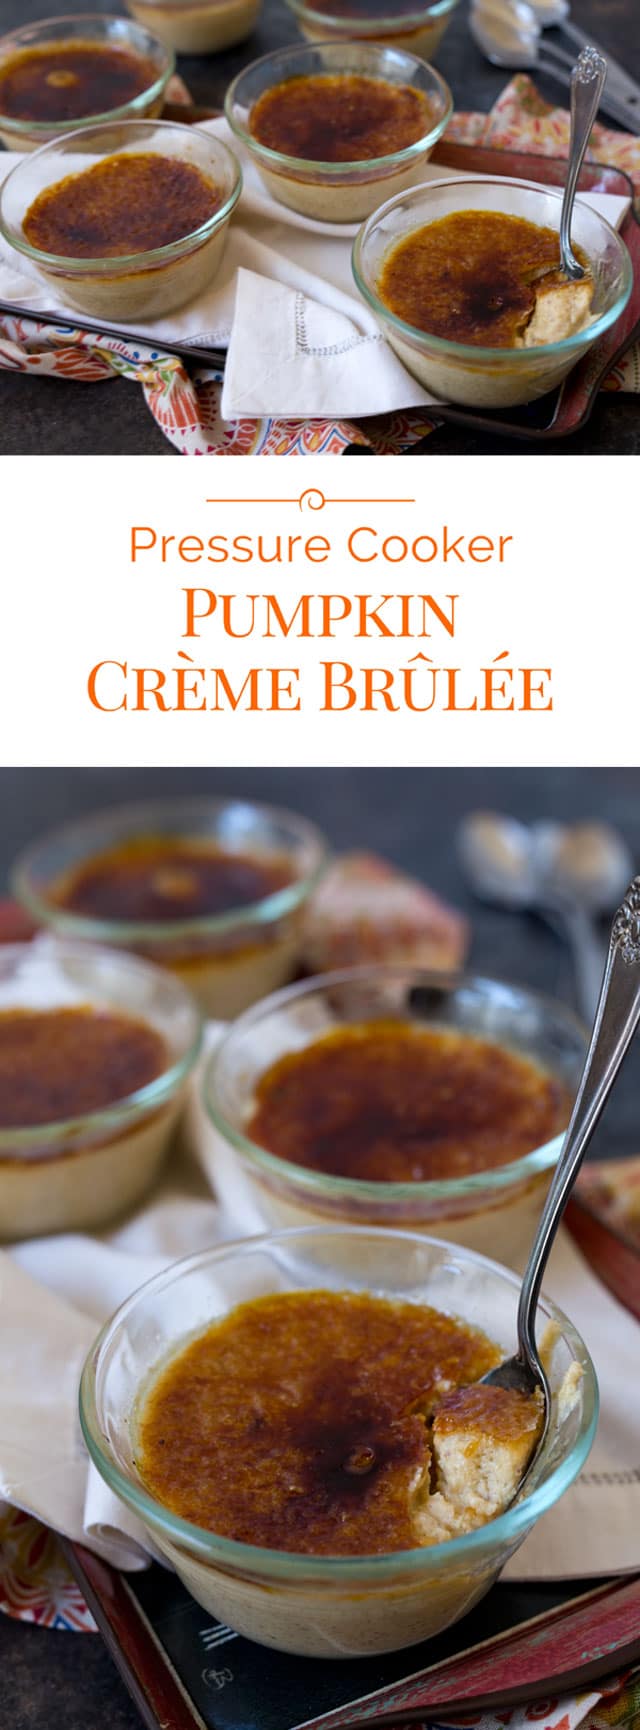 Pressure Cooker Pumpkin Crème Brûlée photo collage